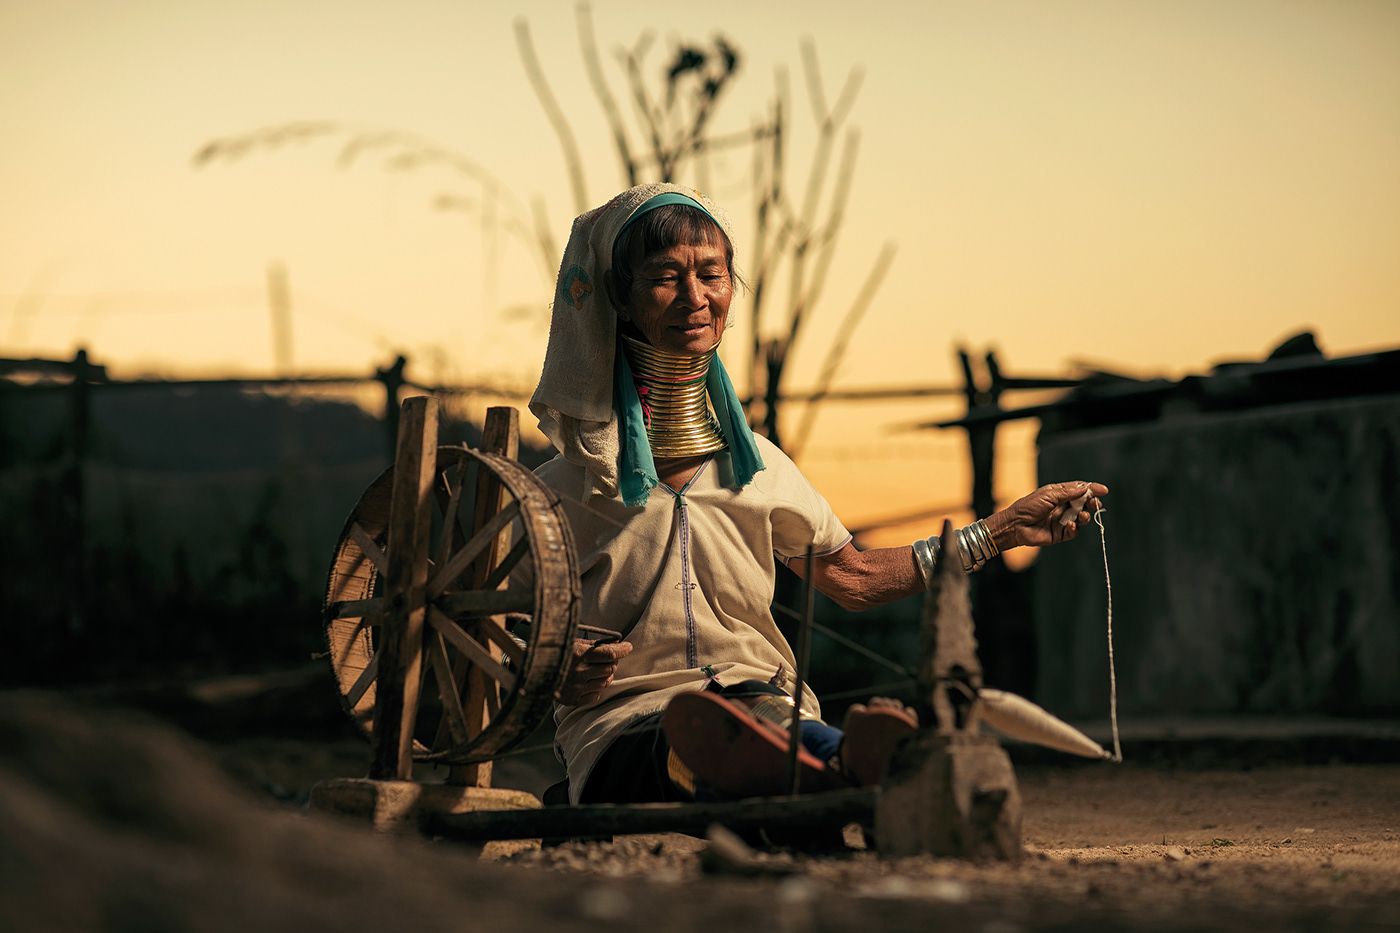 tribe portrait burma tribal woman asia documental environmental cinematic